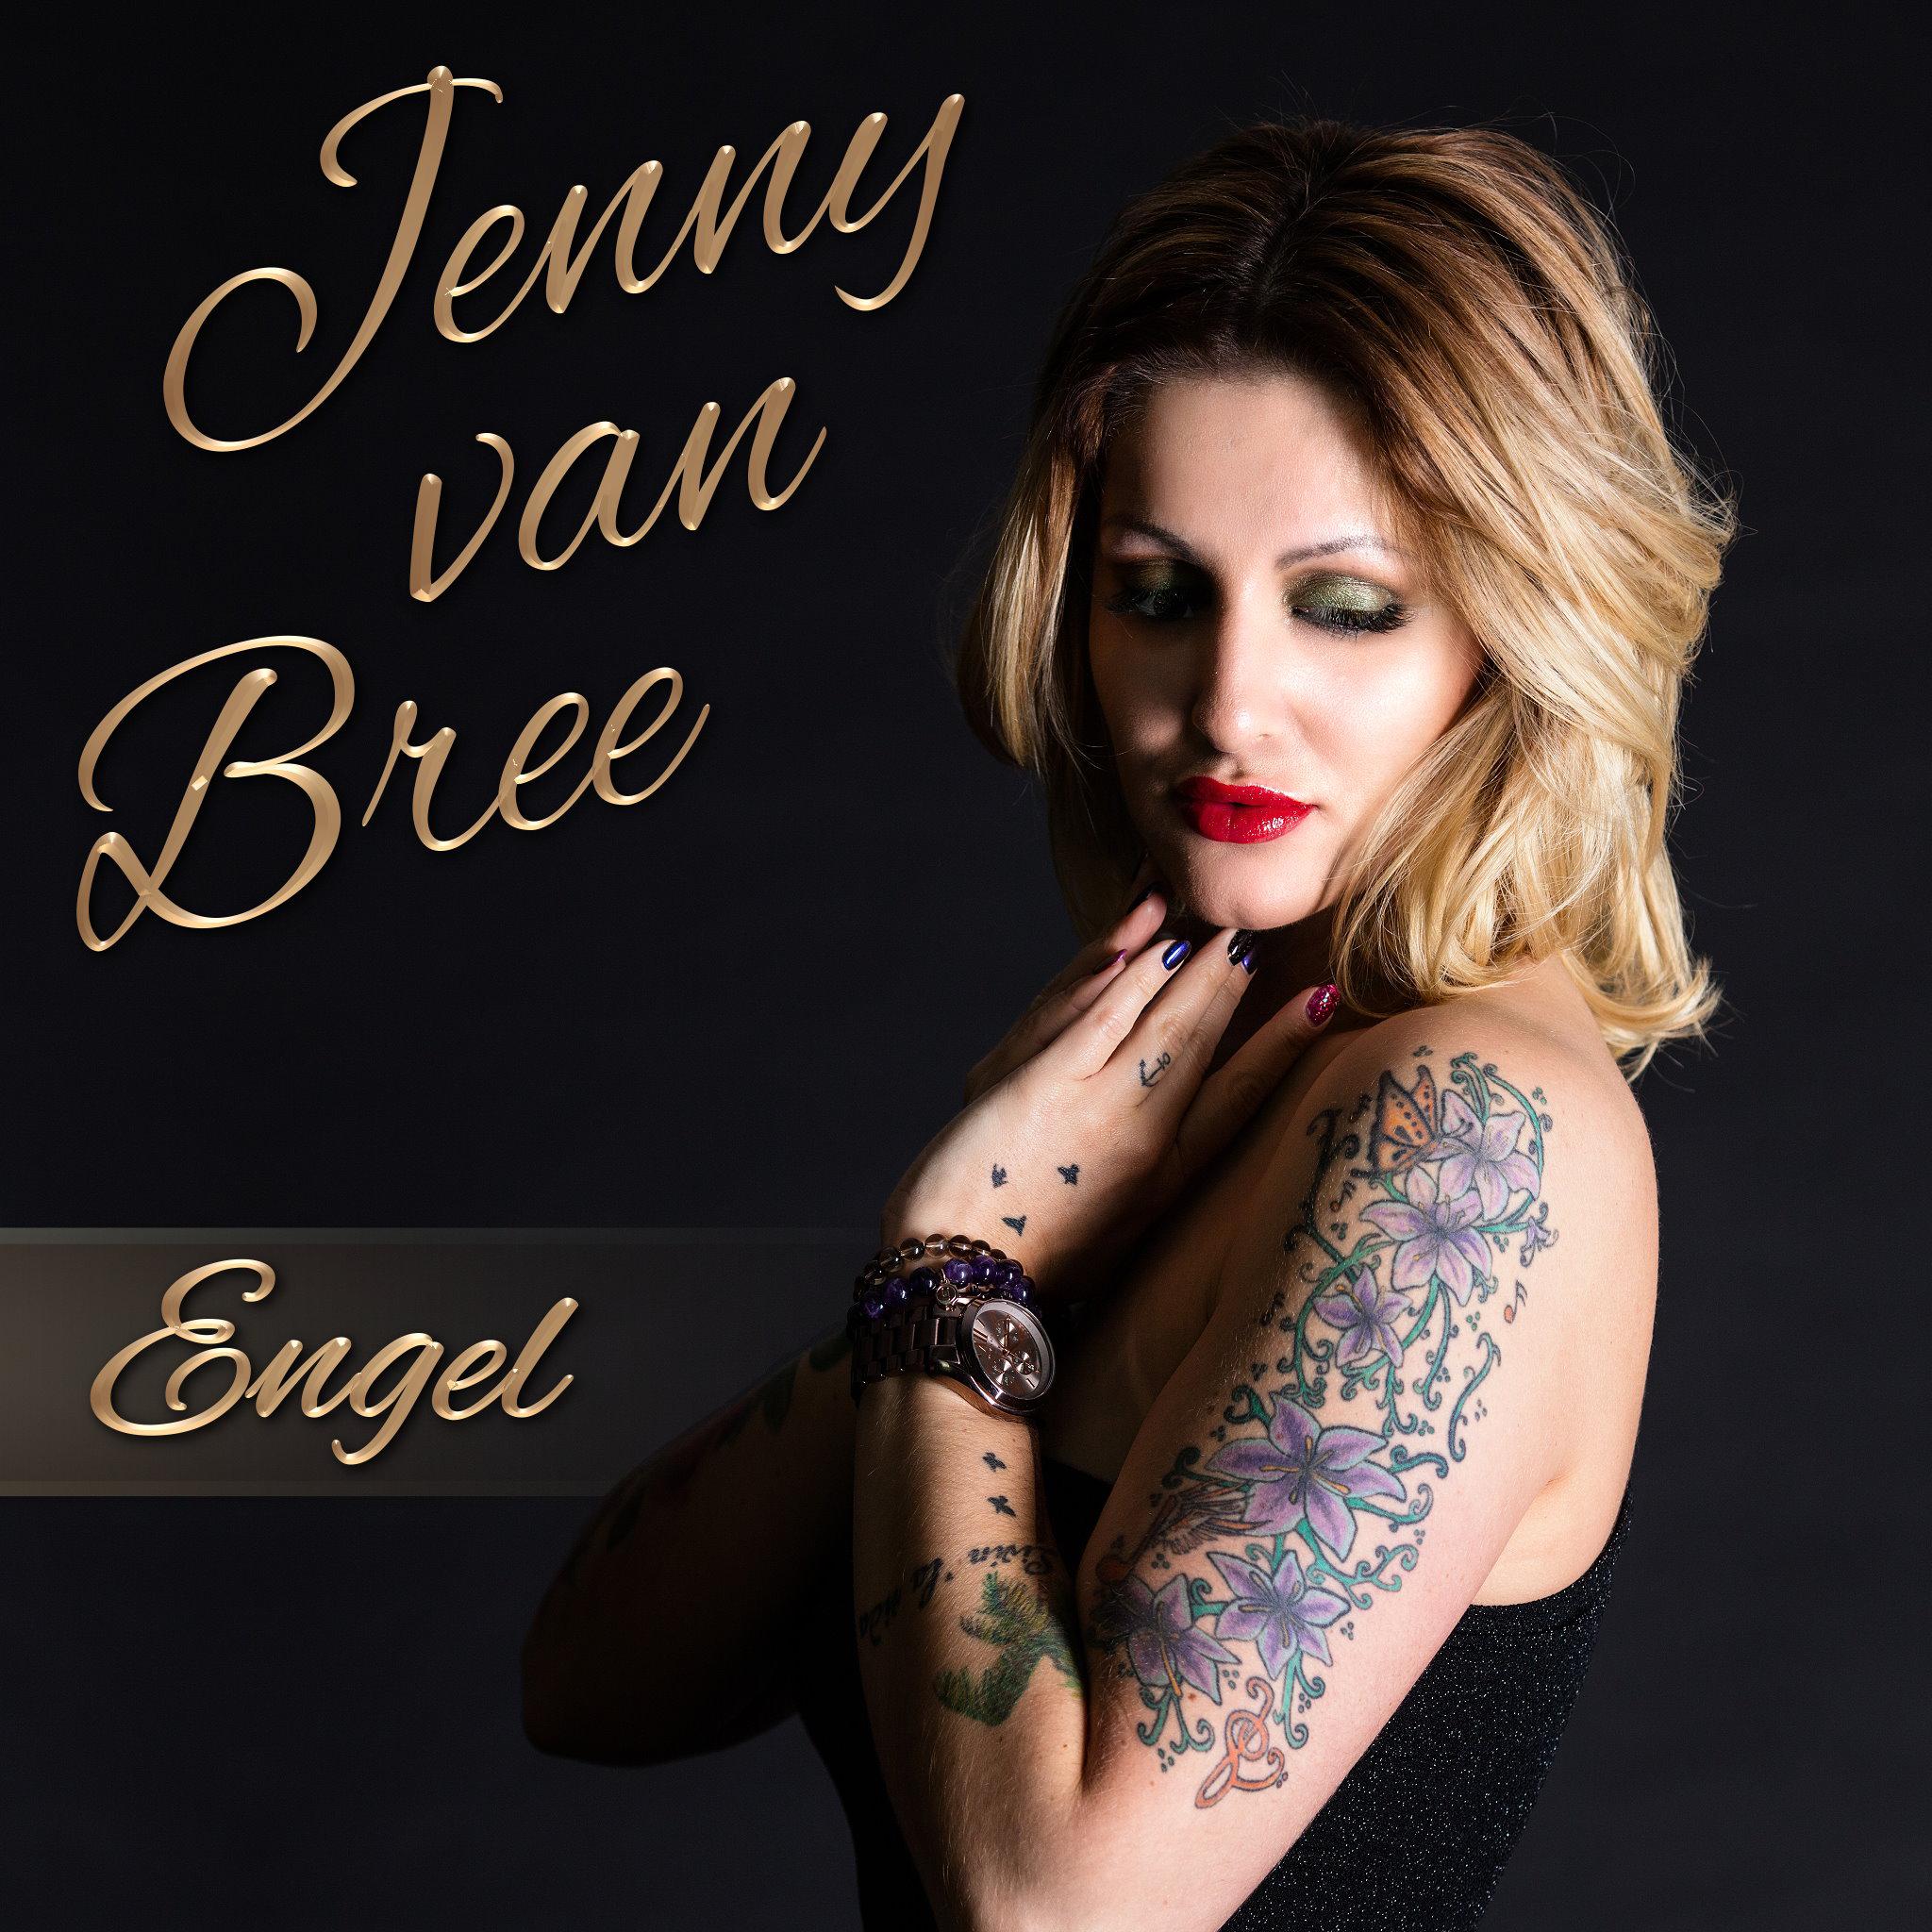 Jenny van Bree - Engel